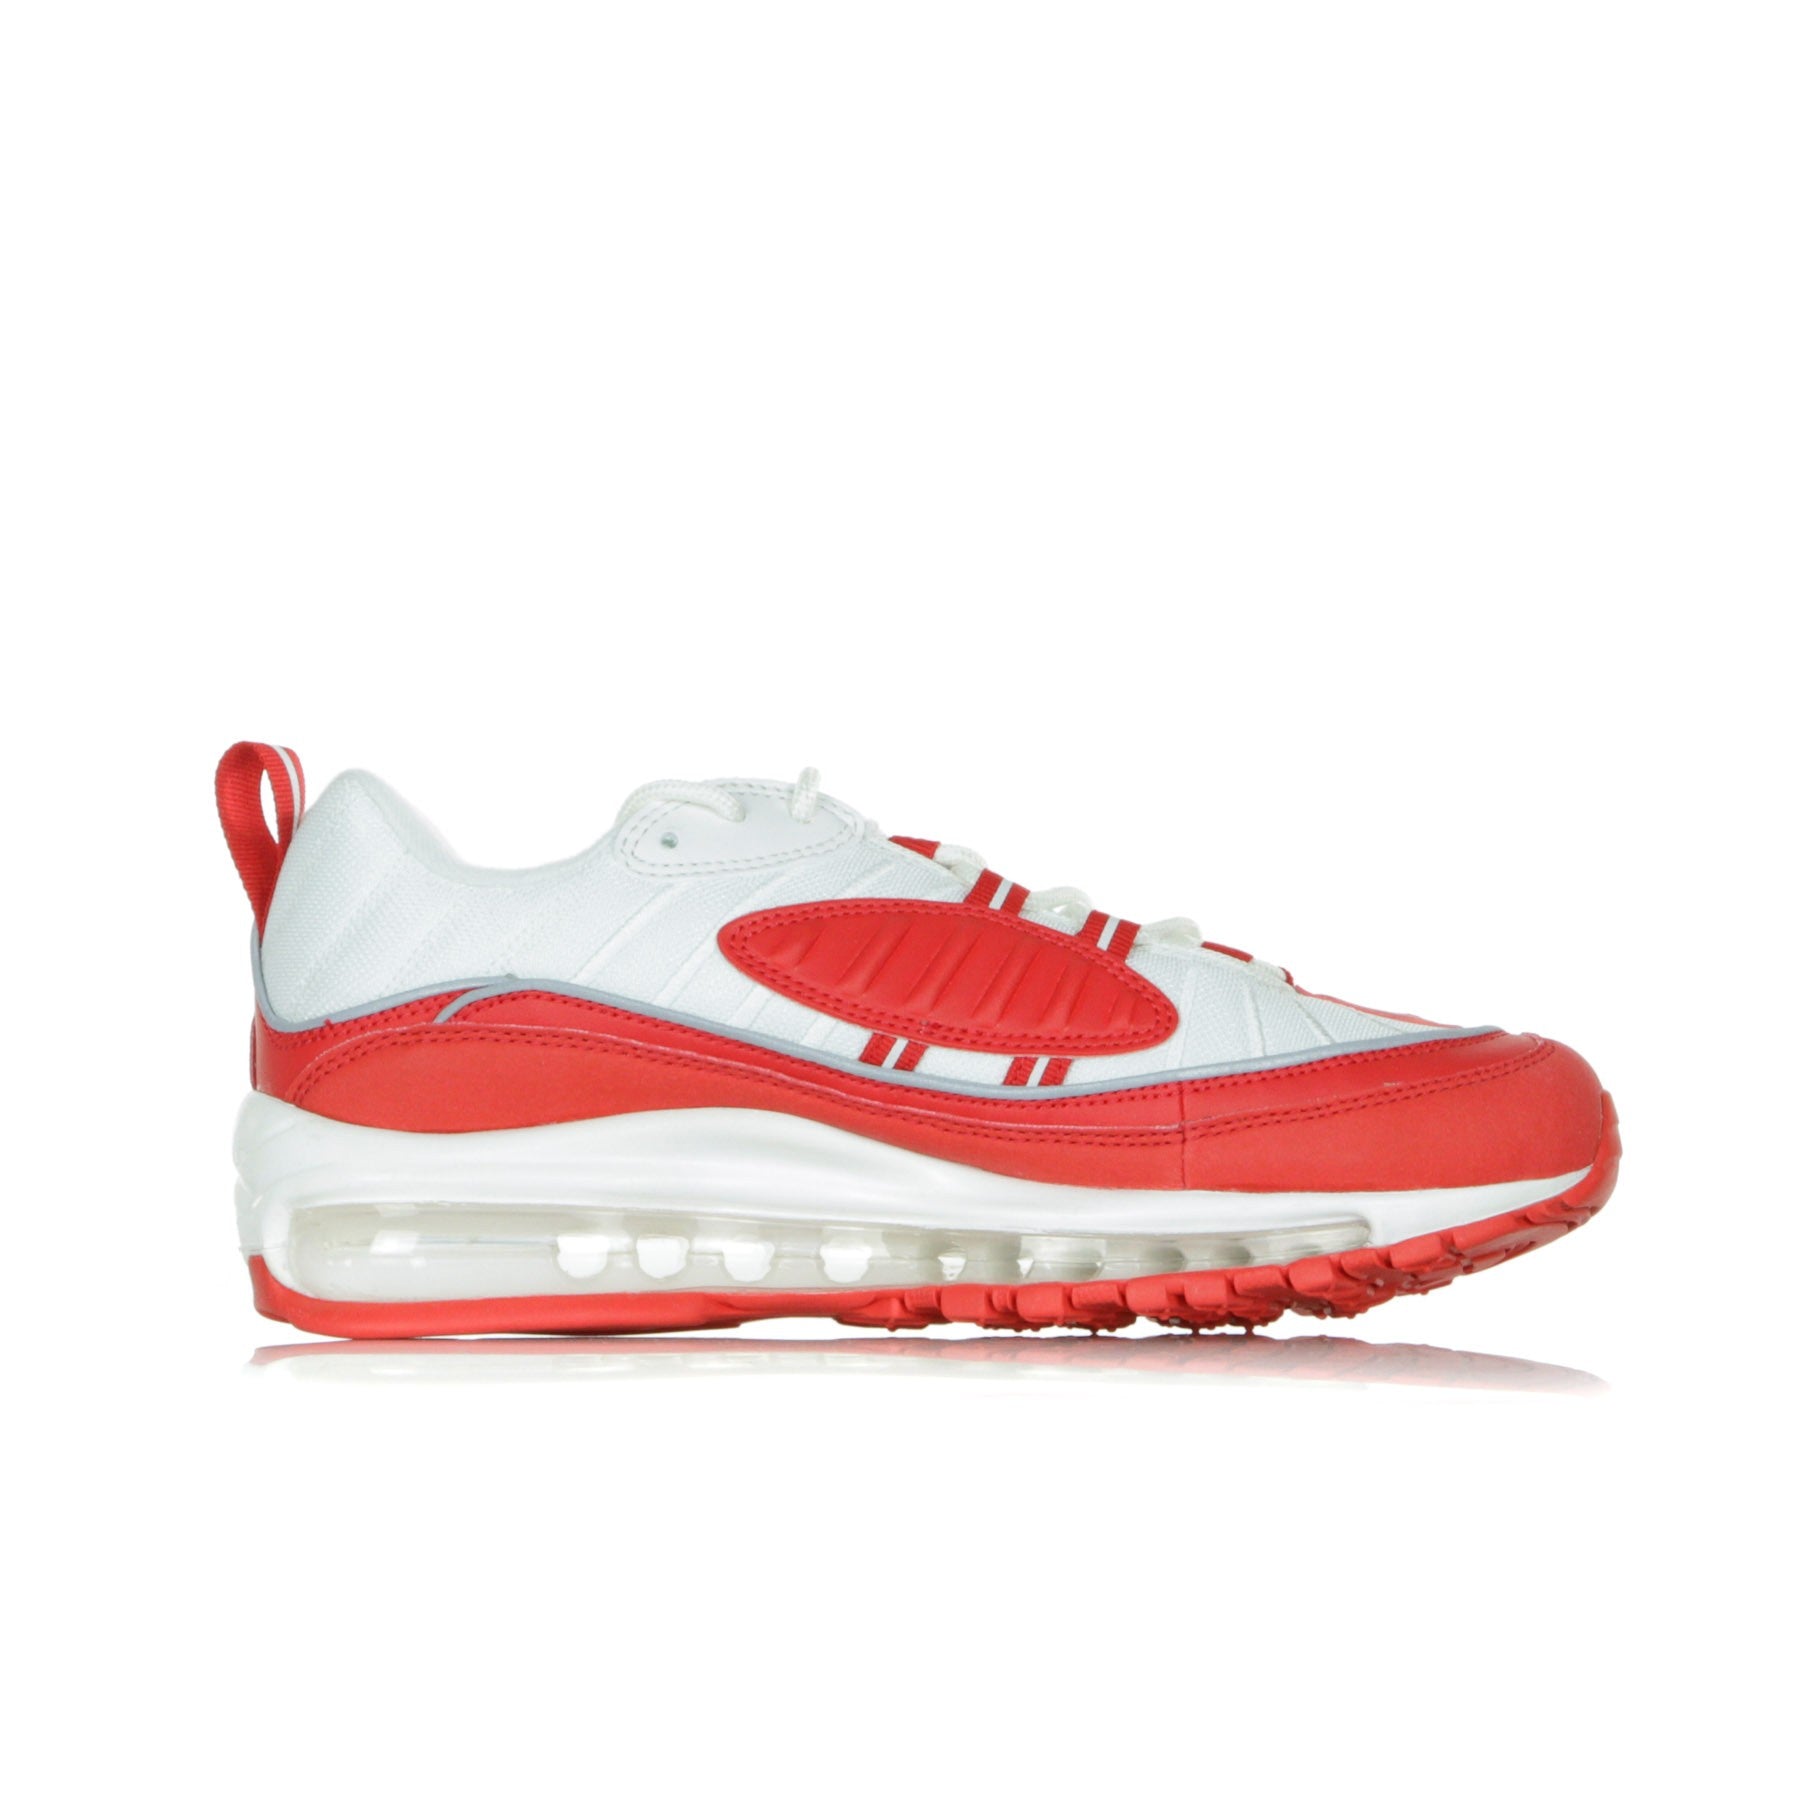 Air Max 98 University Red/university Red Men's Low Shoe